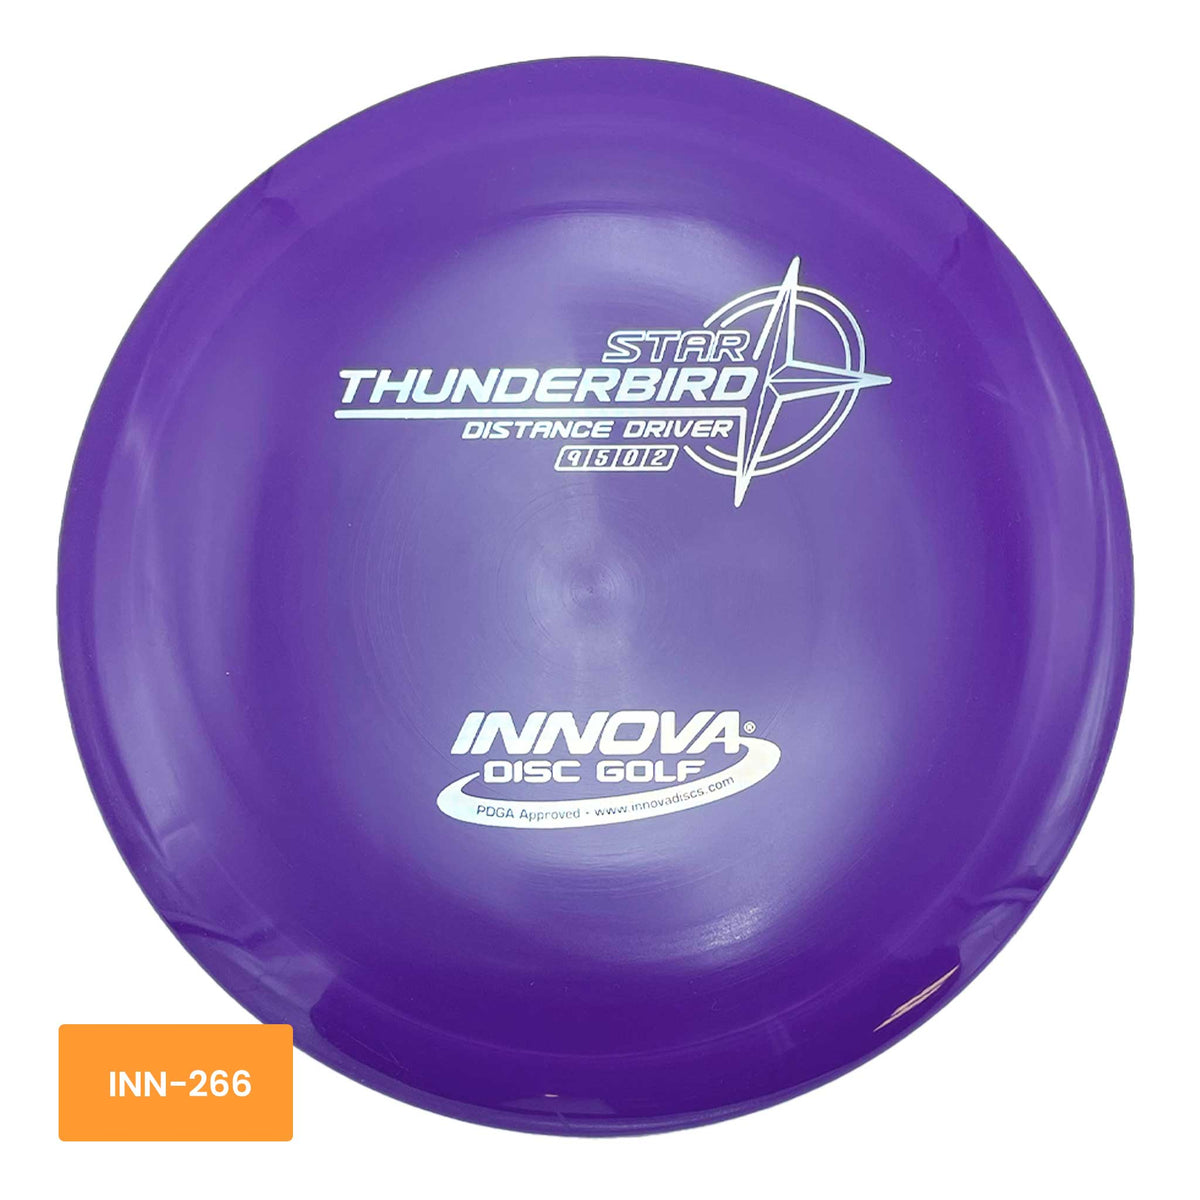 Innova Disc Golf Star Thunderbird distance driver - Purple